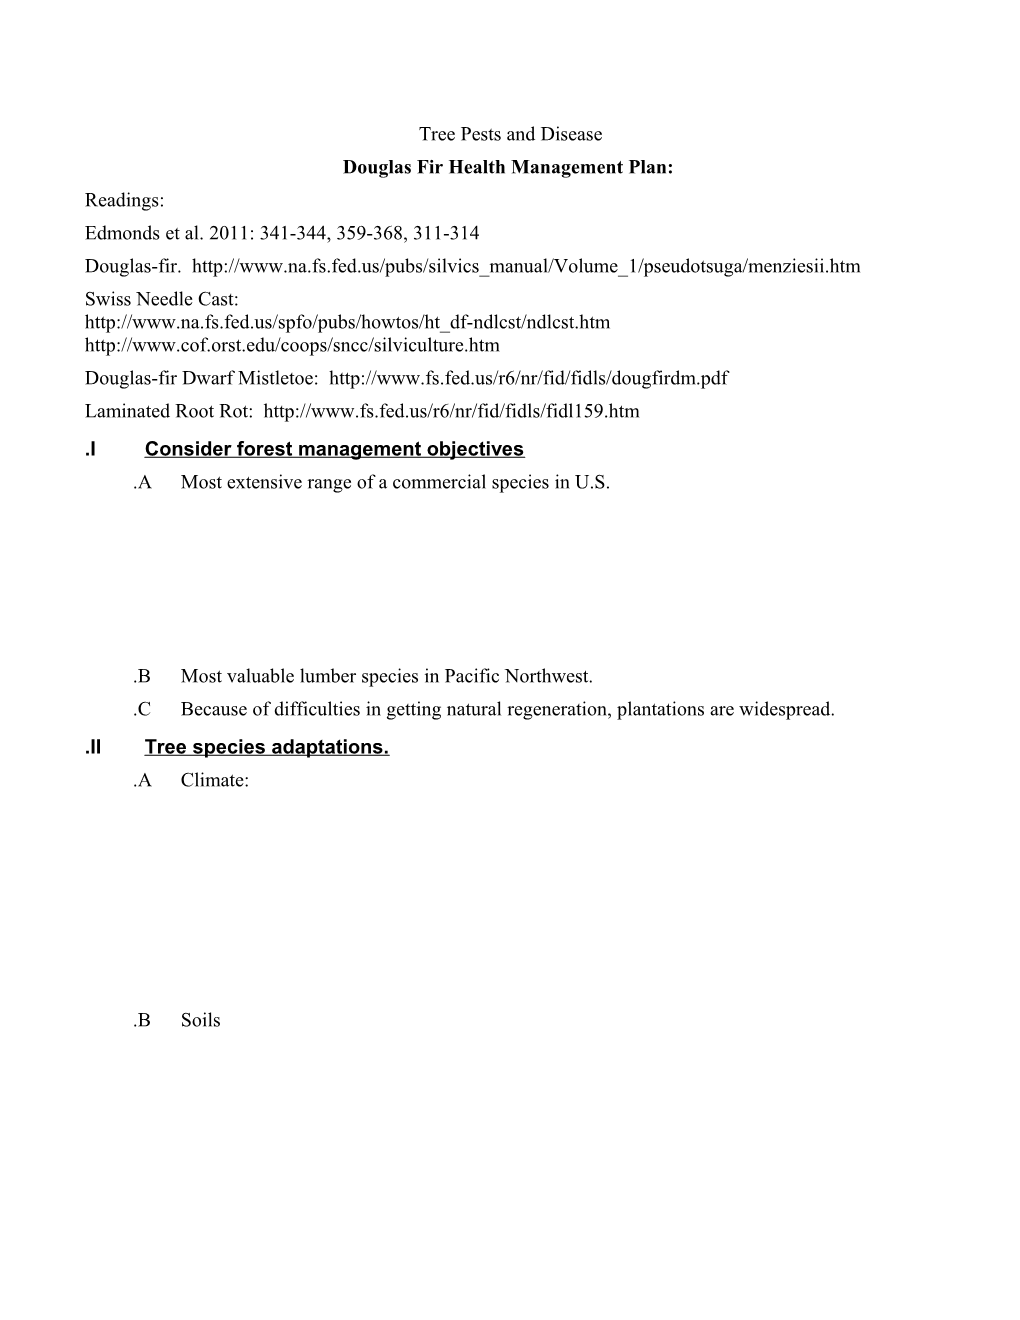 Douglas-Fir Health Management Plan Page 13